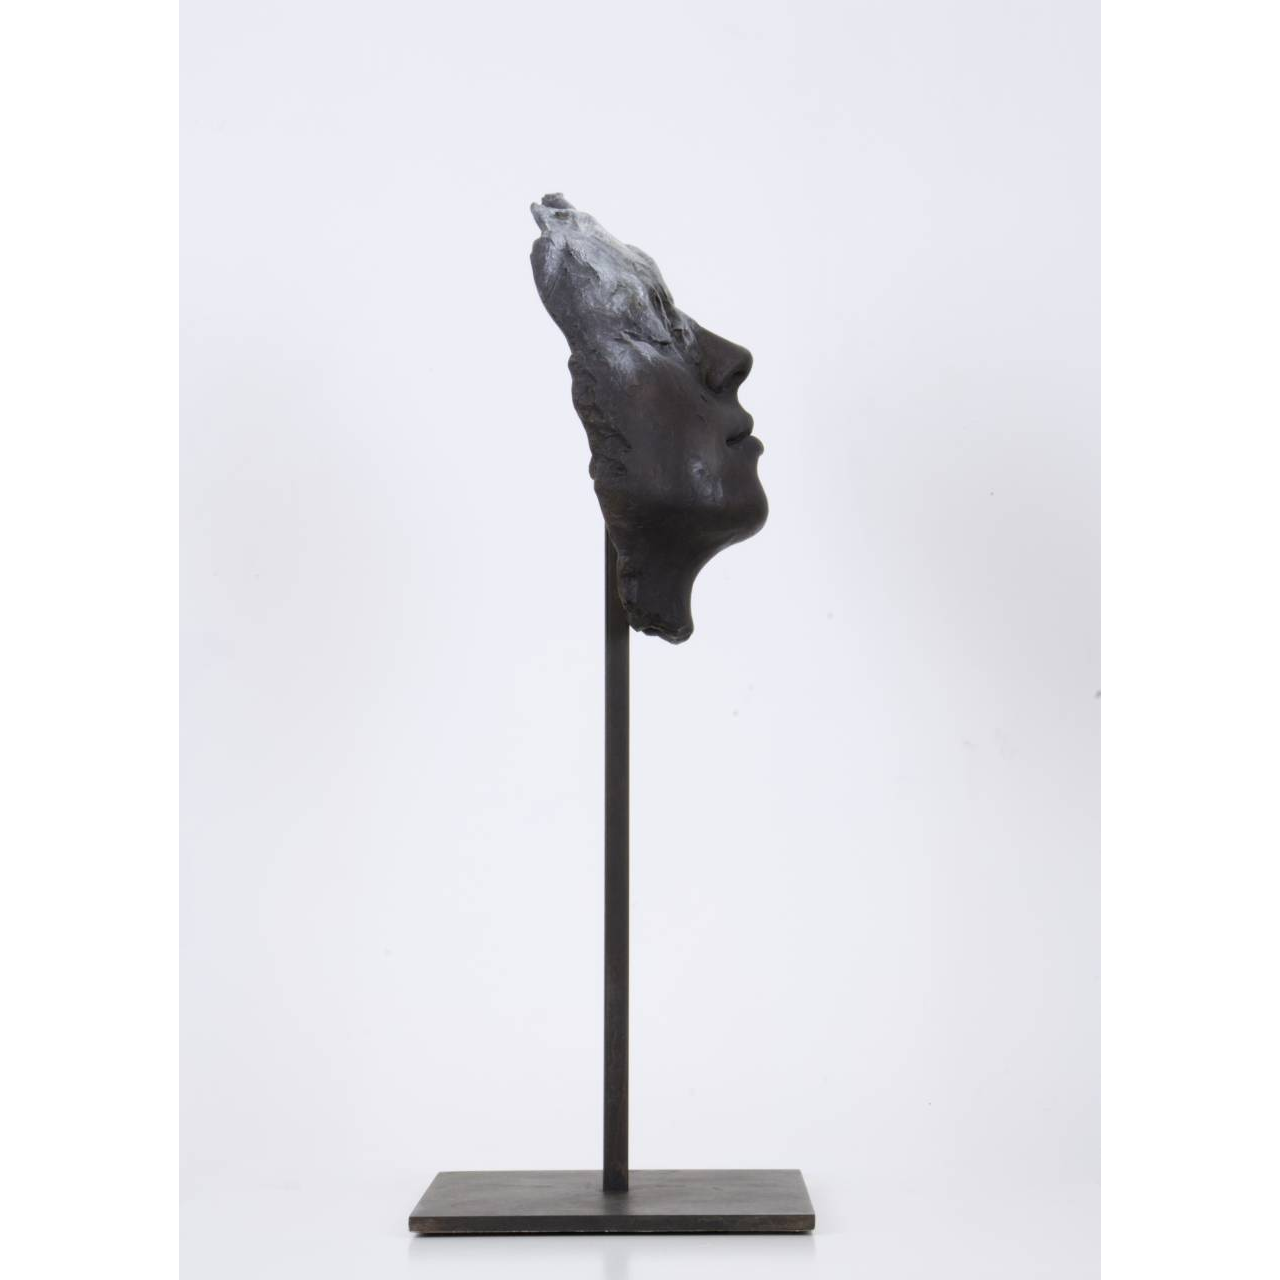 Coderch & Malavia, Mascara, Bronze Patiné (25ex + 5 EA), 43x 16 X 16 cm